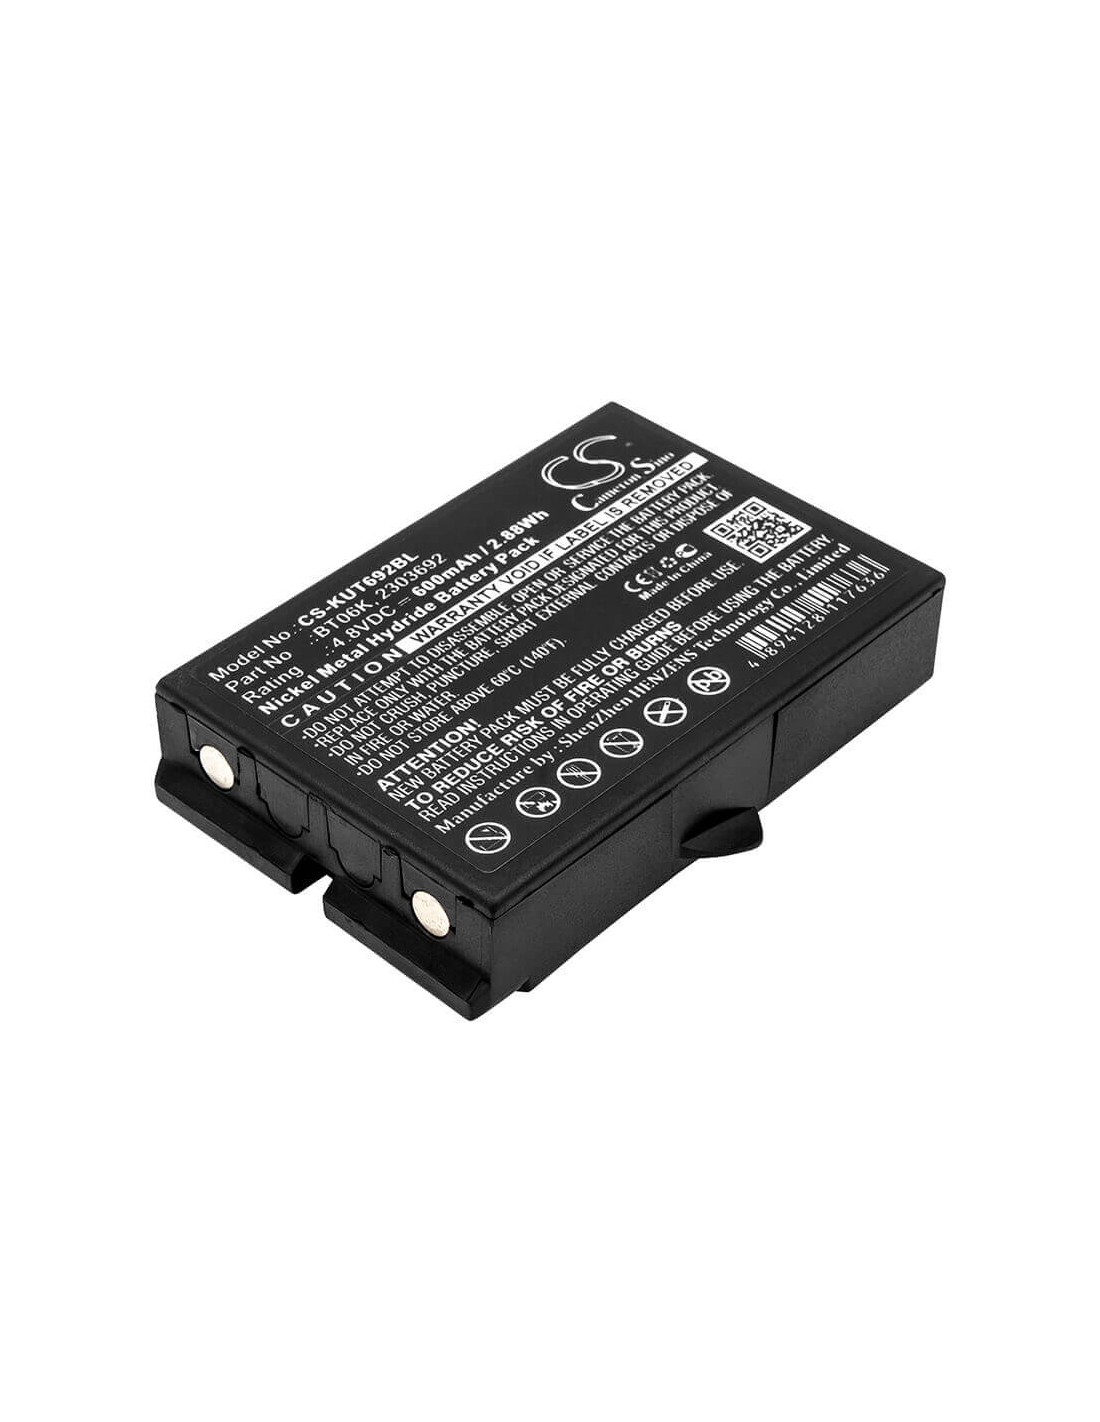 Battery for Ikusi, 2303692, Rad-tf Transmitters, Rad-ts 4.8V, 600mAh - 2.88Wh